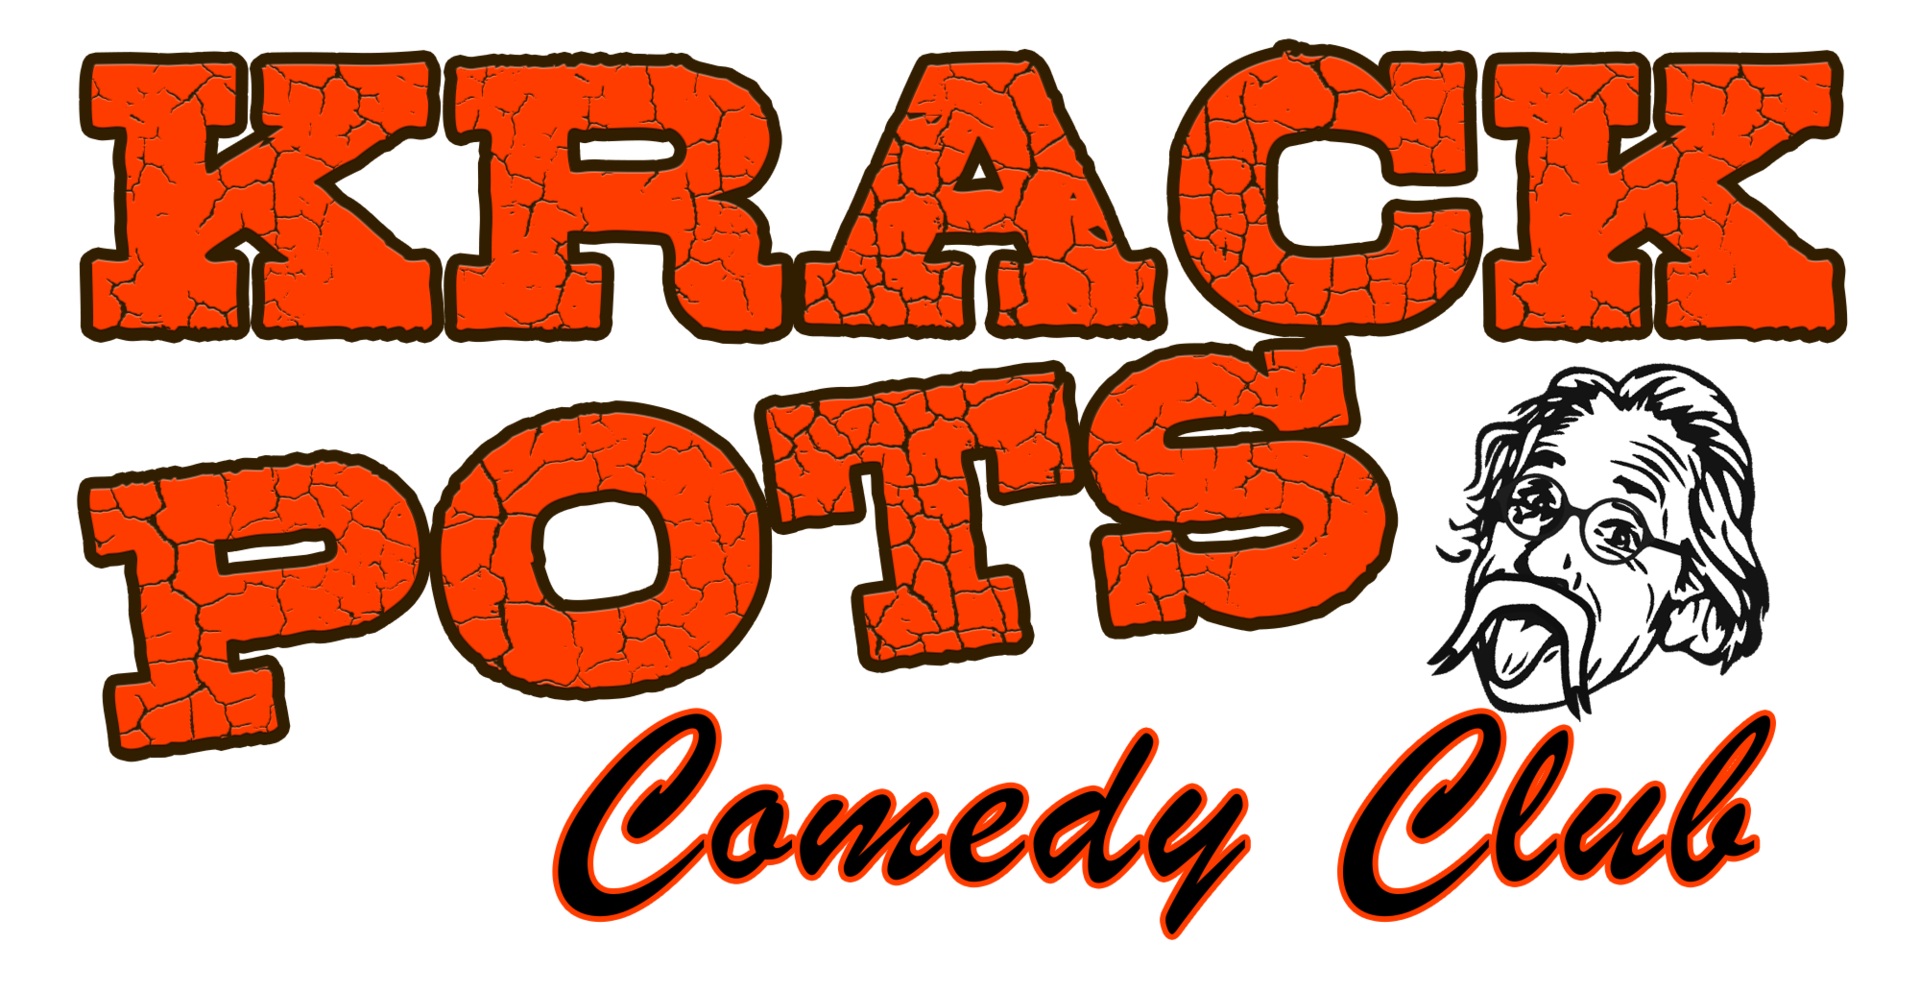 Sunday FREE Comedy Showcase at Krackpots Comedy Club, Massillon, Ohio, United States